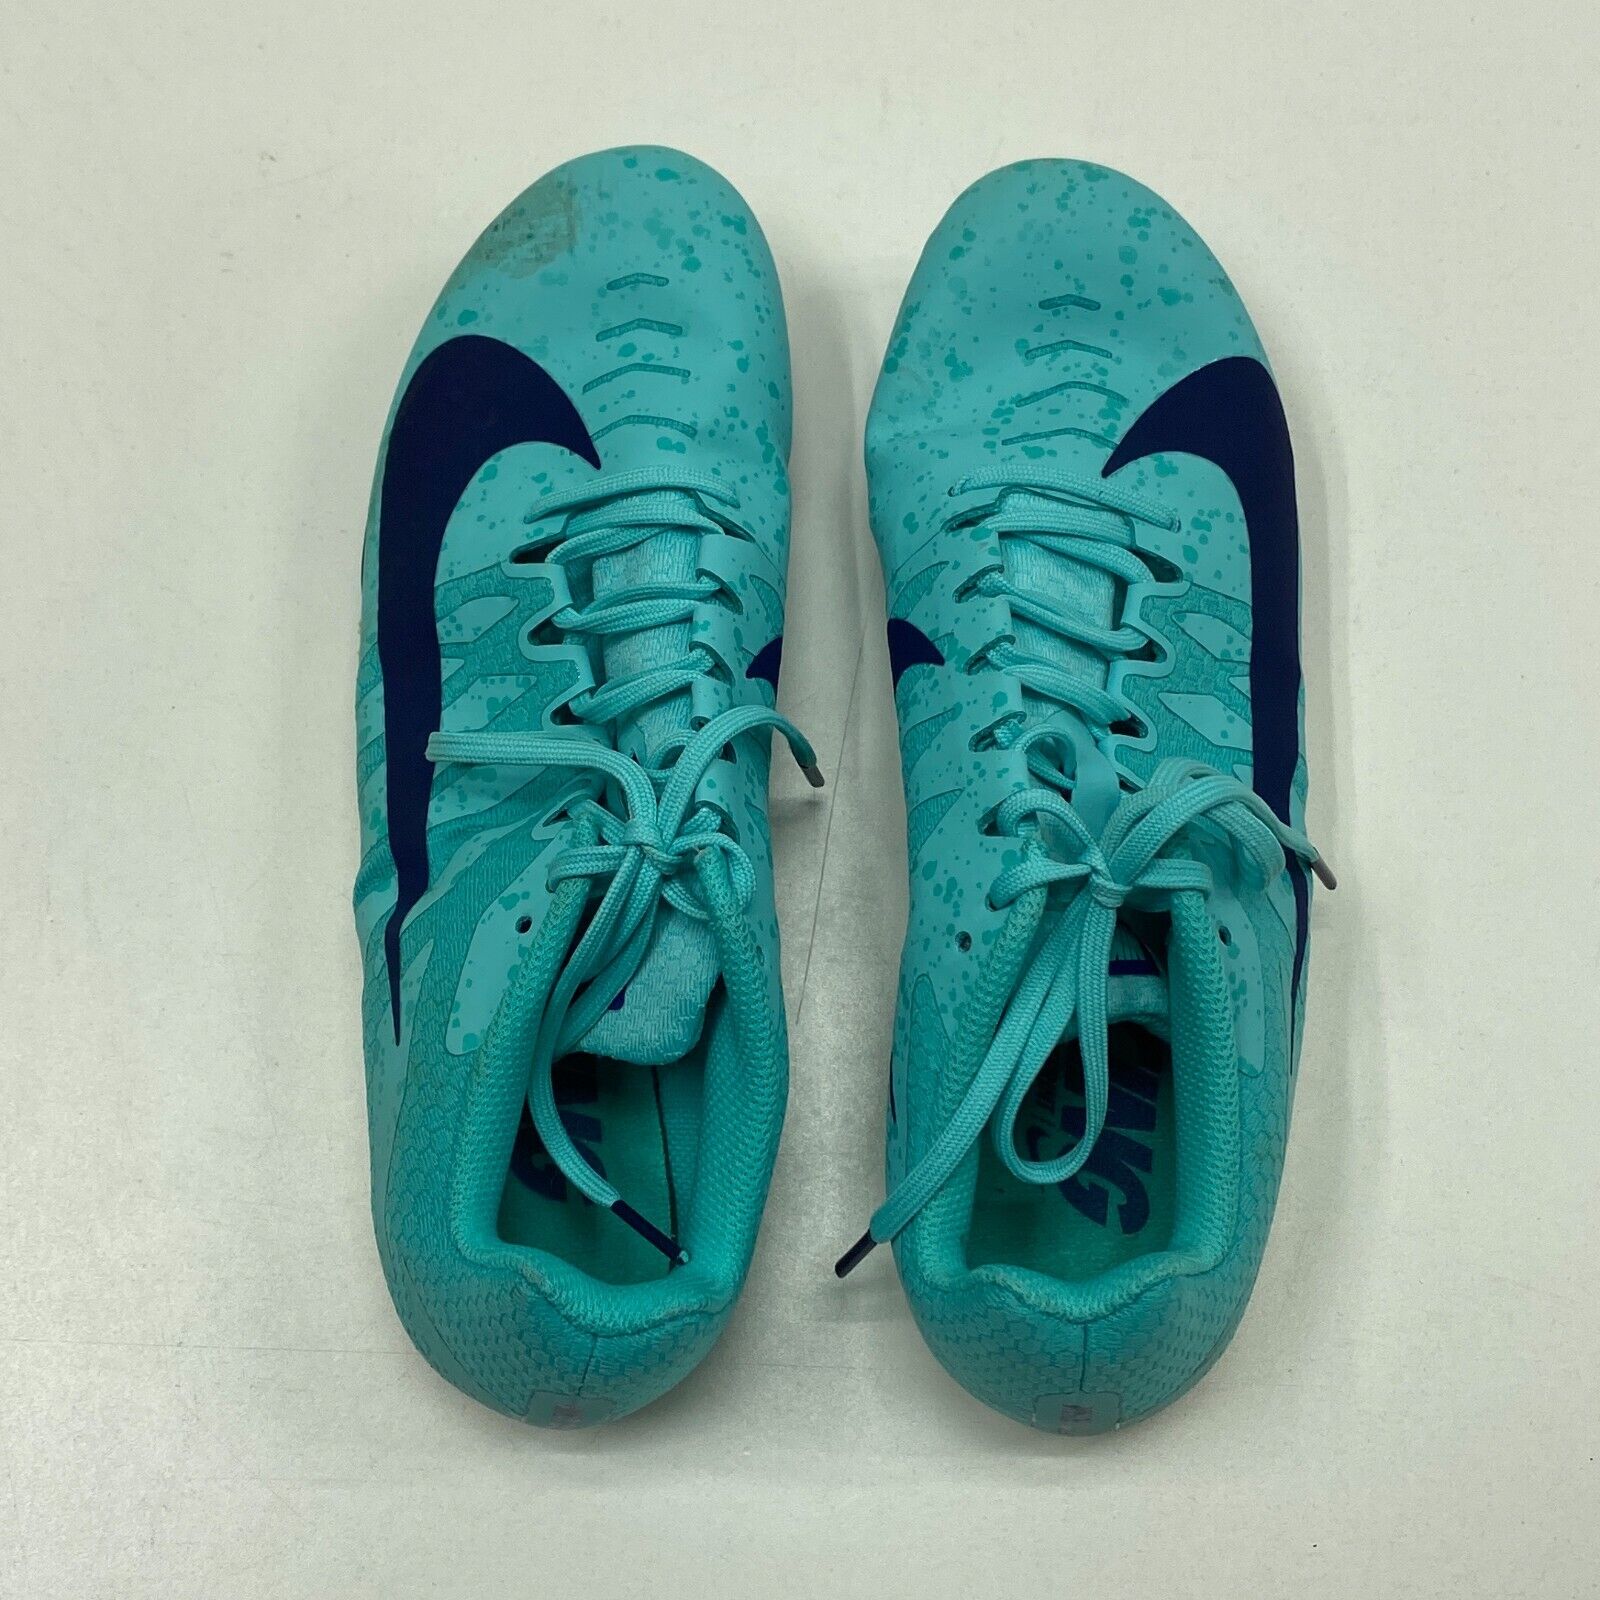 Nike Women's Zoom Rival S 9 907565-300 Blue Low Top Lace Up Sneaker Shoes Sz 9.5